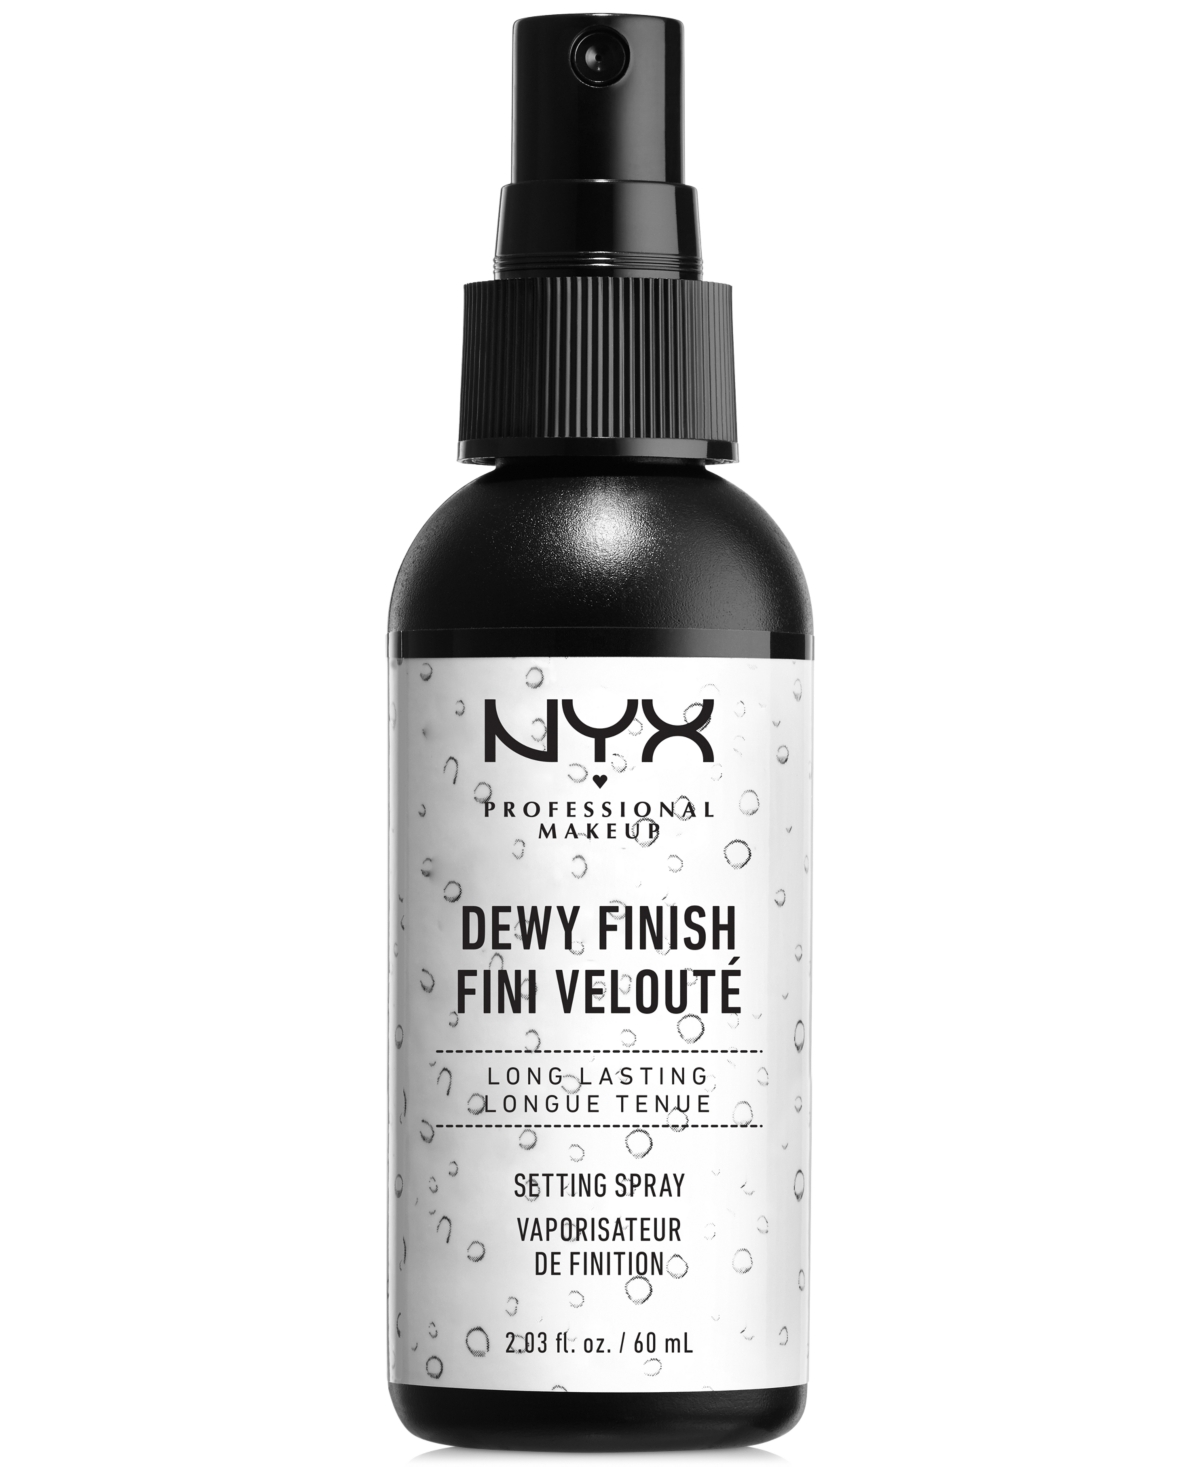 Makeup Setting Spray - Dewy Finish, 2.03-oz. - DEWY FINISH/LONG LASTING